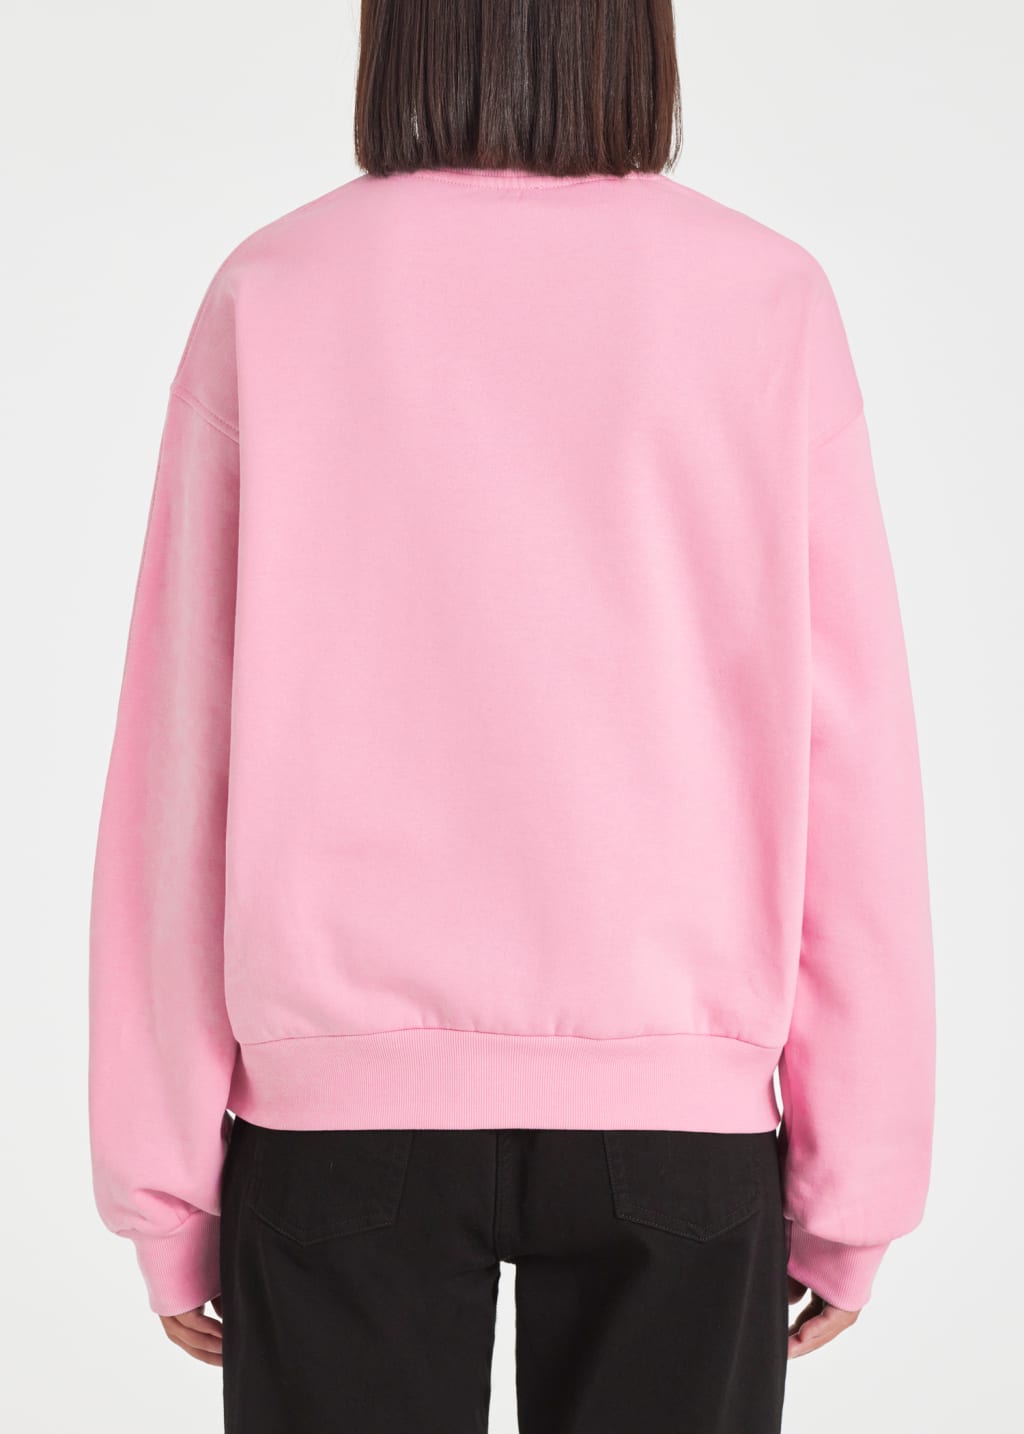 Model View - Women's Pink Zebra Logo Cotton Sweatshirt by Paul Smith